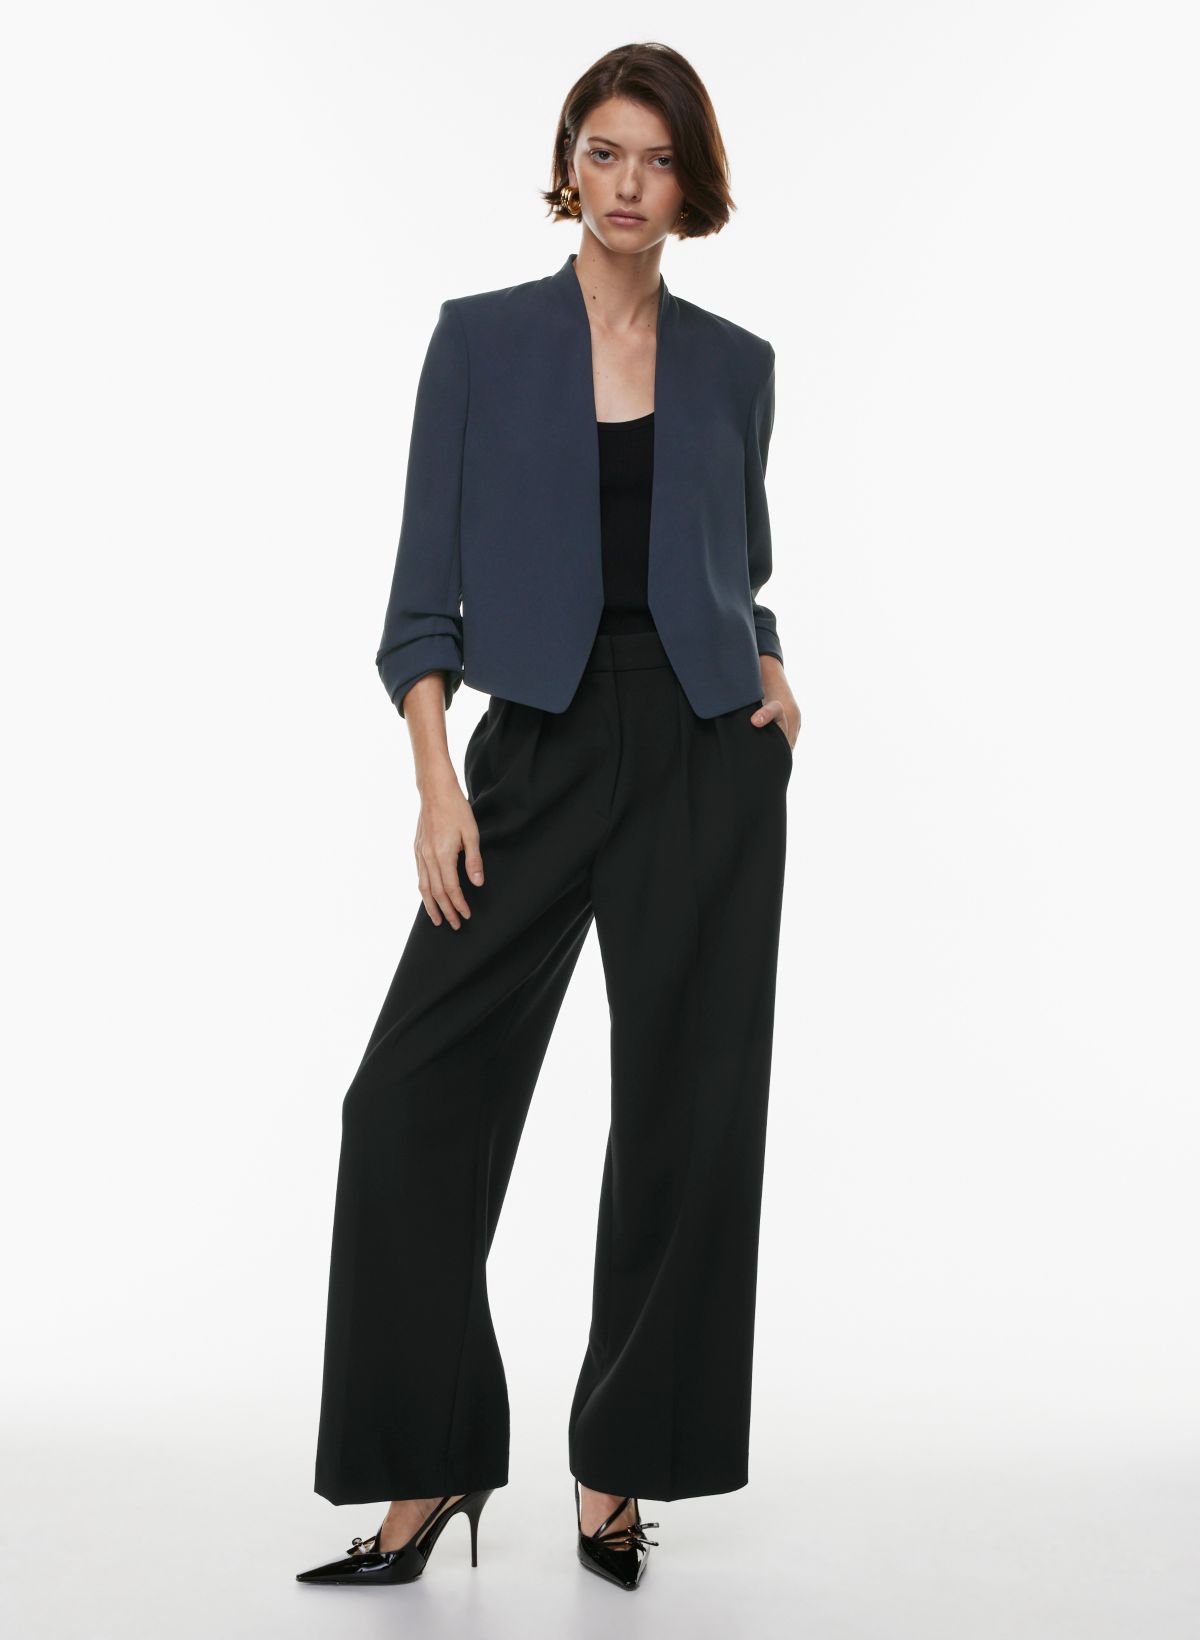 Soft Jersey Drape Pants + Black Cropped Blazer - Extra Petite